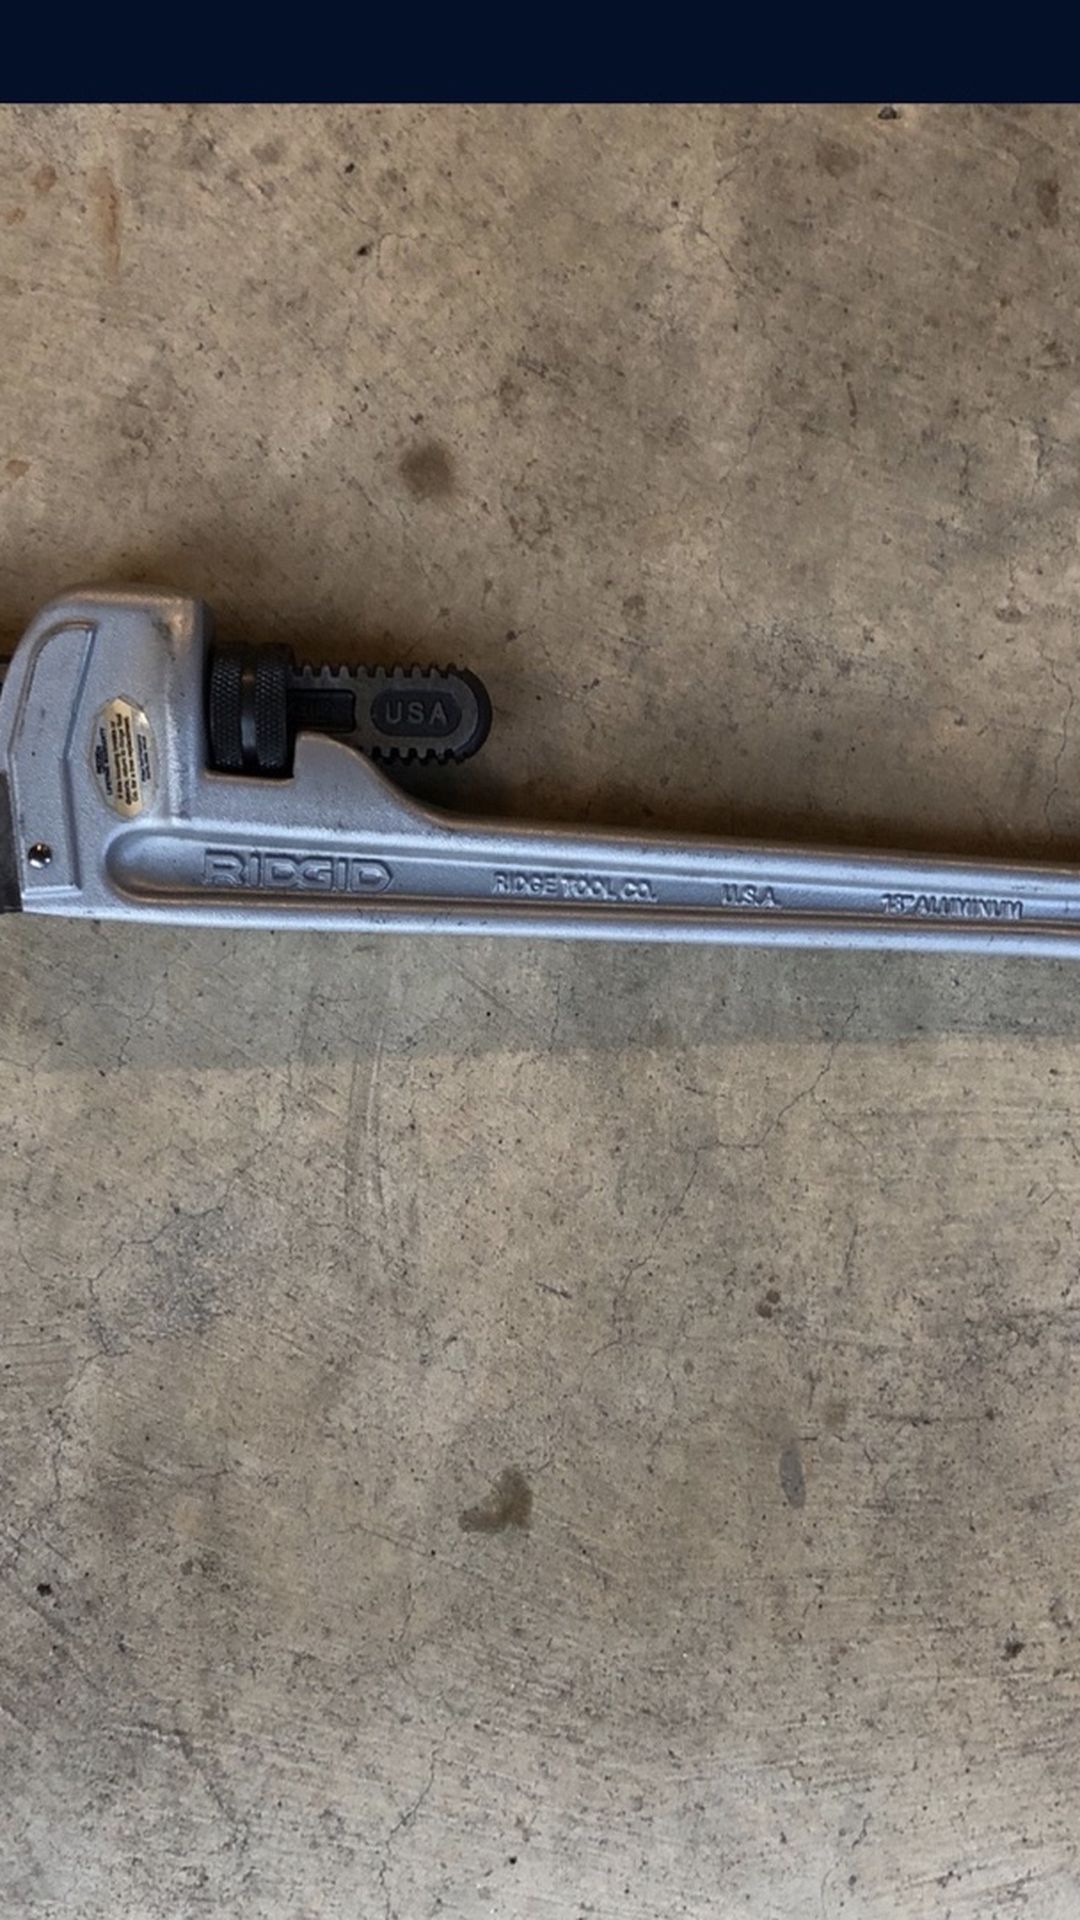 RIDGID pipe wrench aluminum